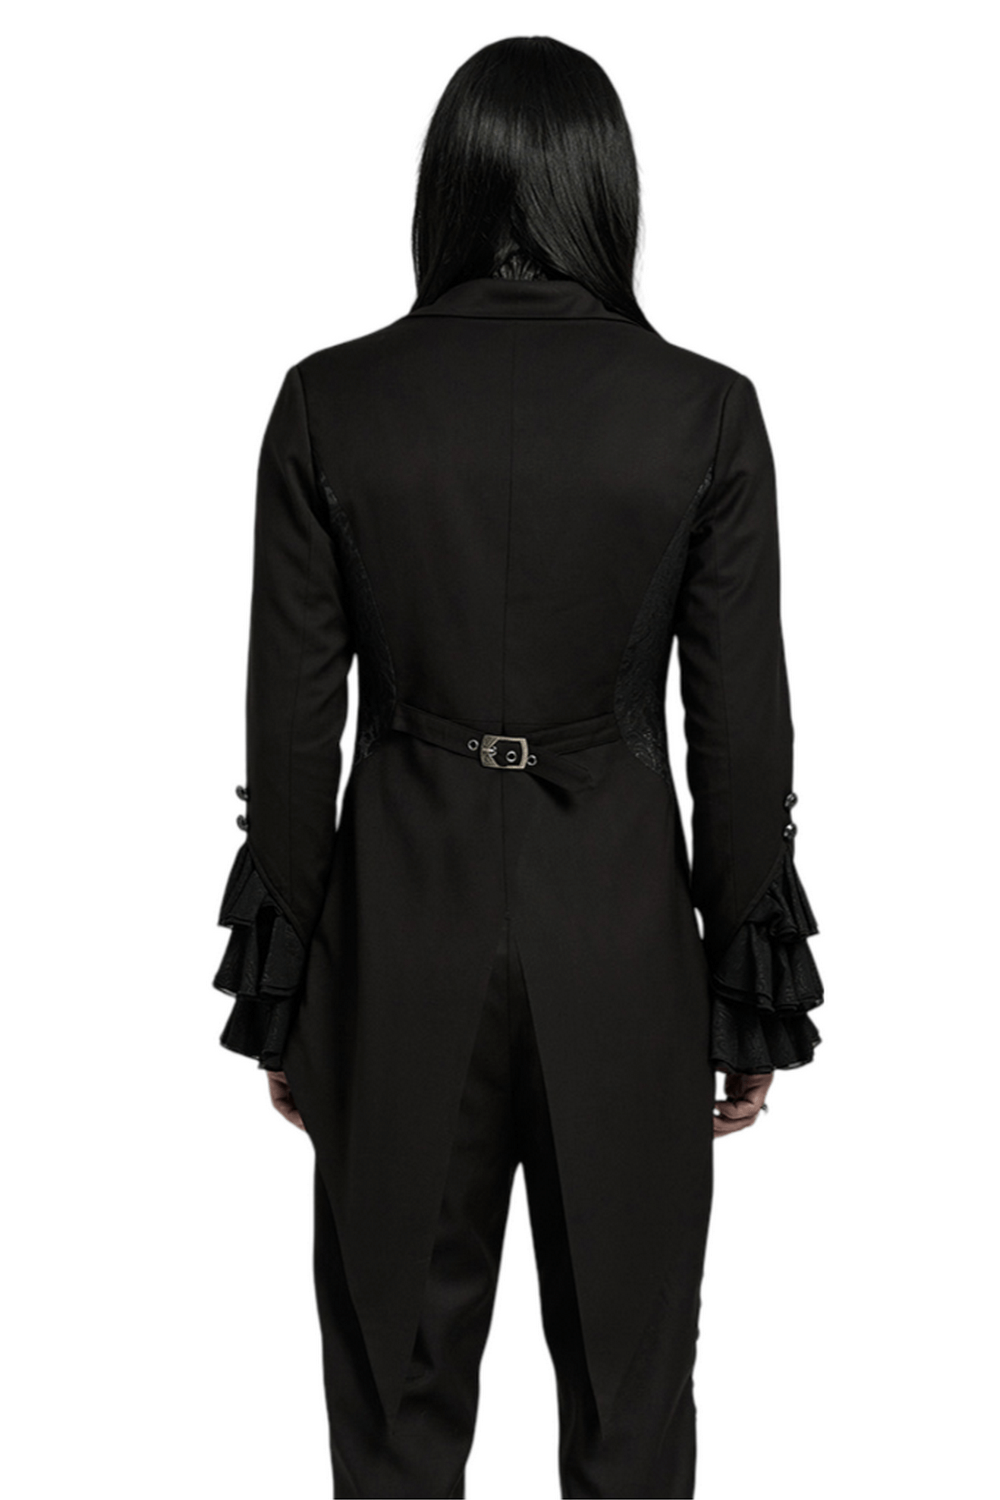 Men's Victorian Style Ruffle Cuff Gothic Jacket